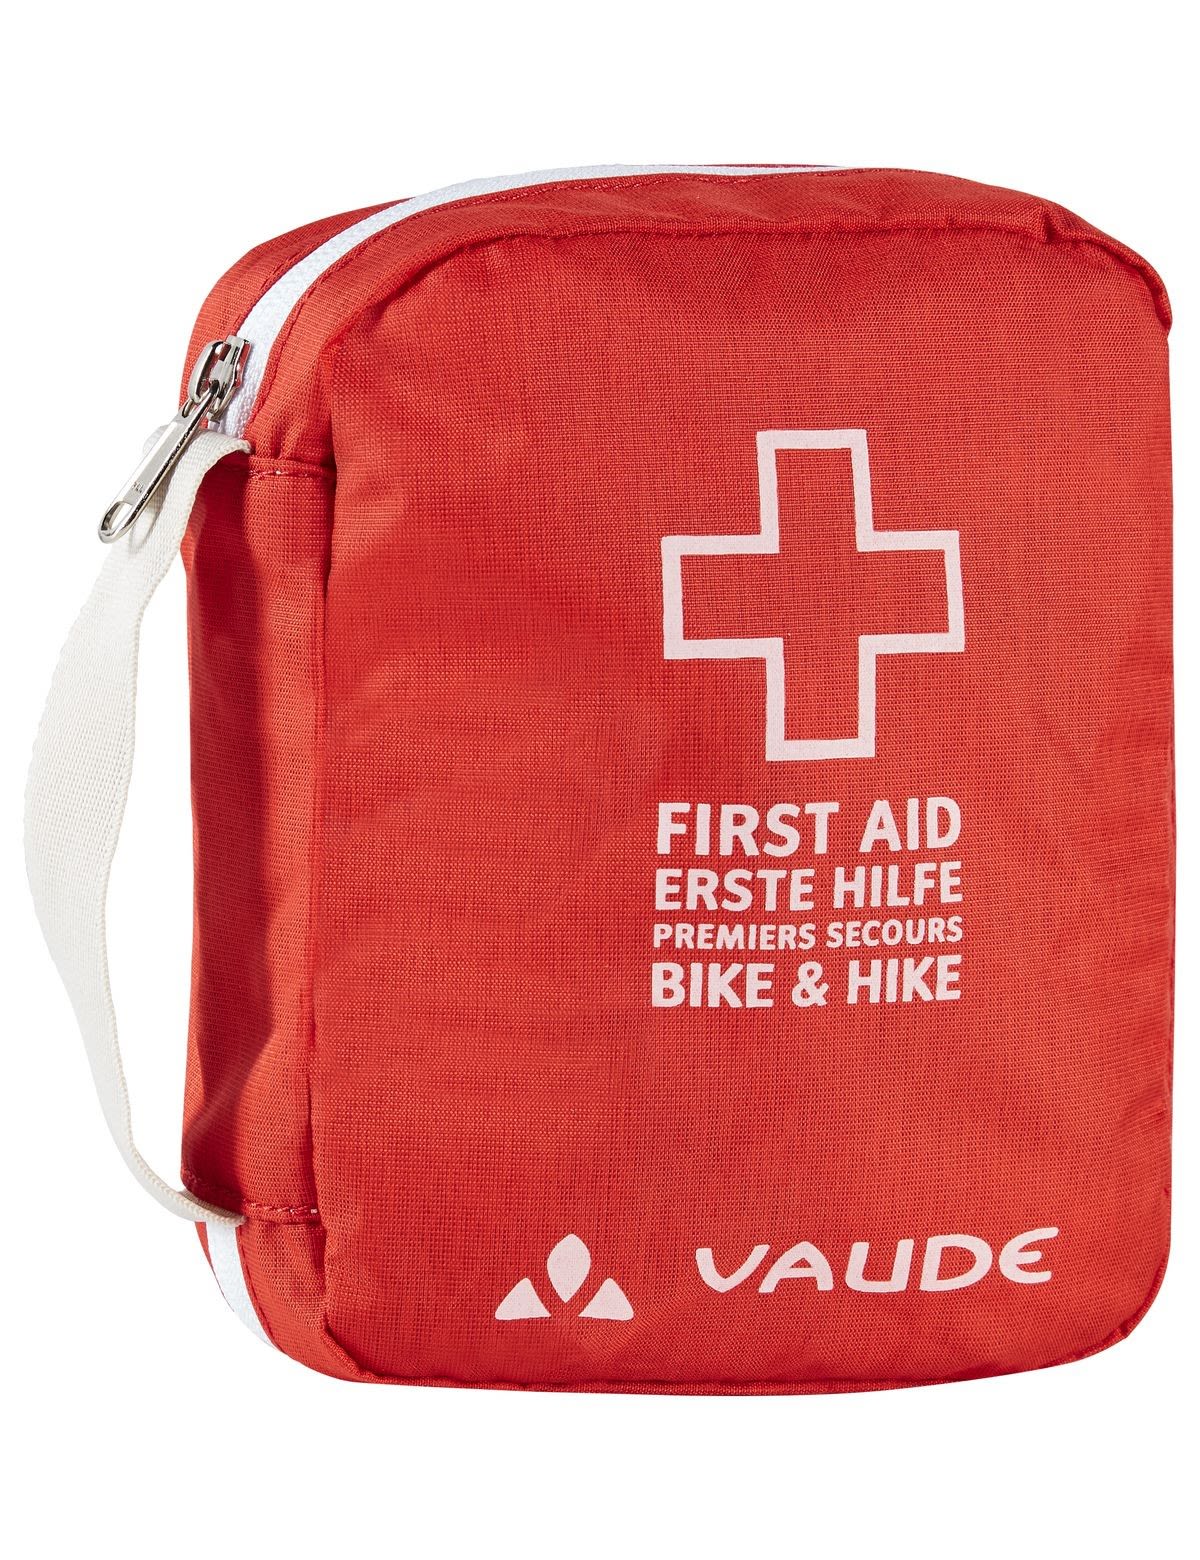 Vaude First AID KIt L Rot- Erste Hilfe und Notfallausrstung- Grsse One Size - Farbe Mars Red